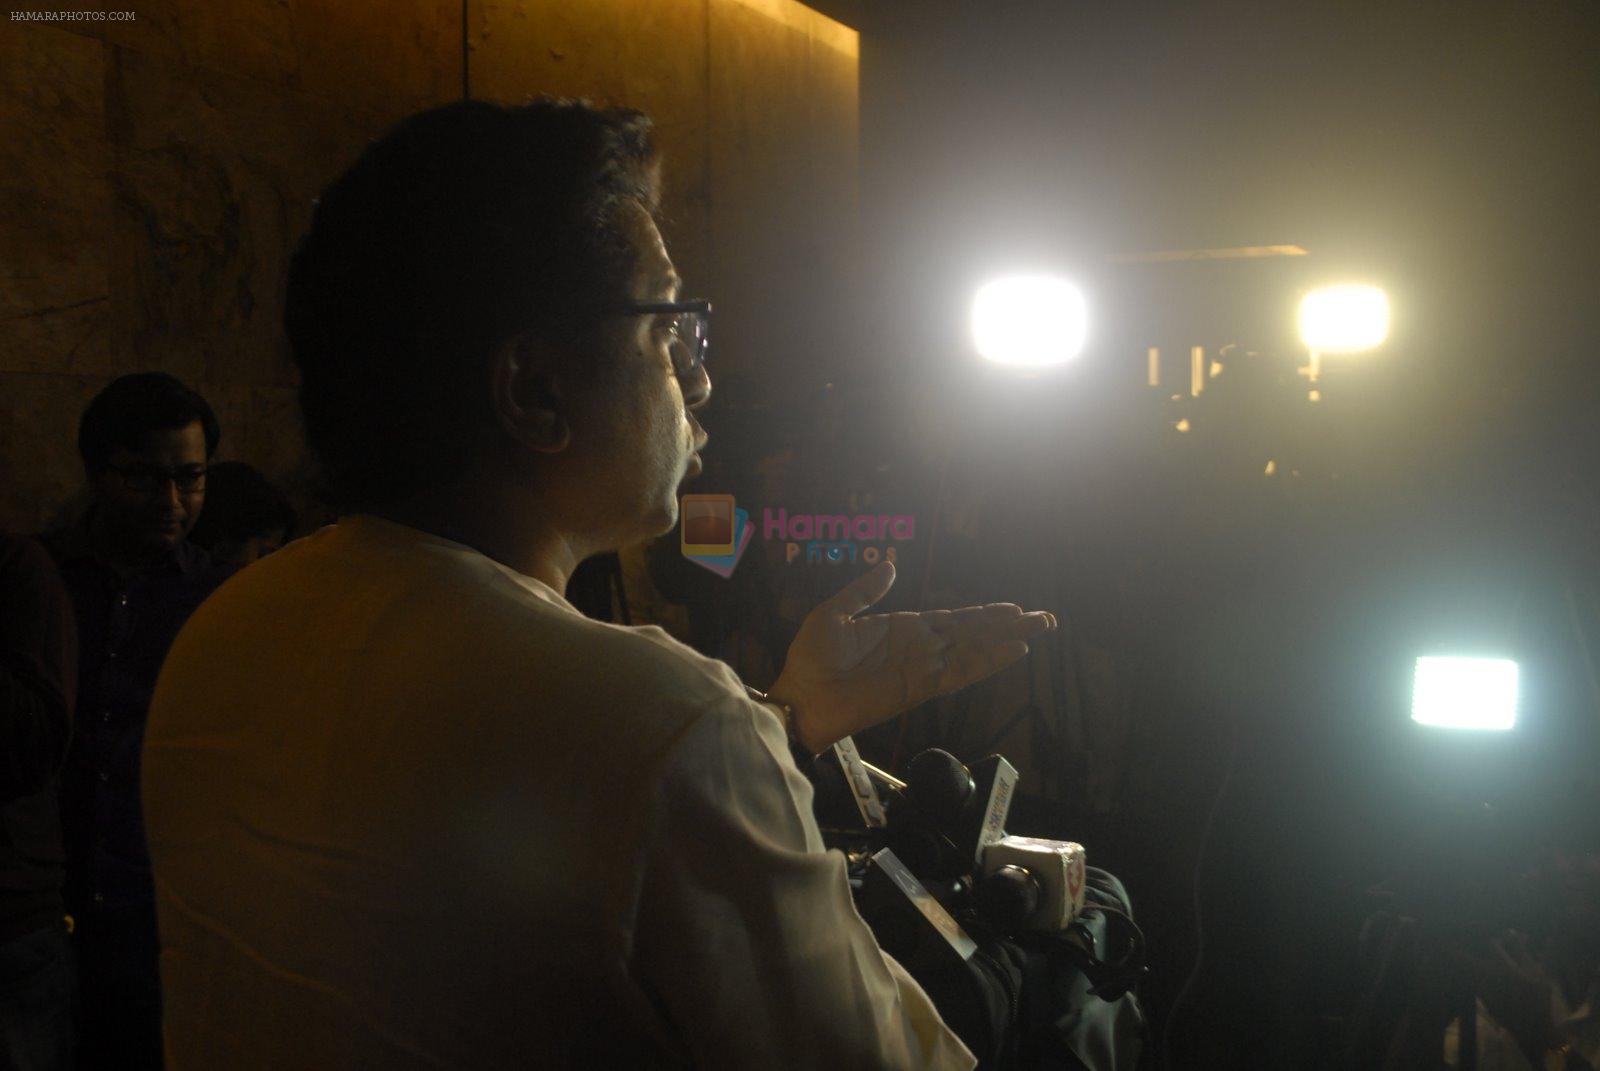 Raj Thackeray at Special screening of PK for Sachin Tendulkar & Raj Thackeray on 16th Dec 2014